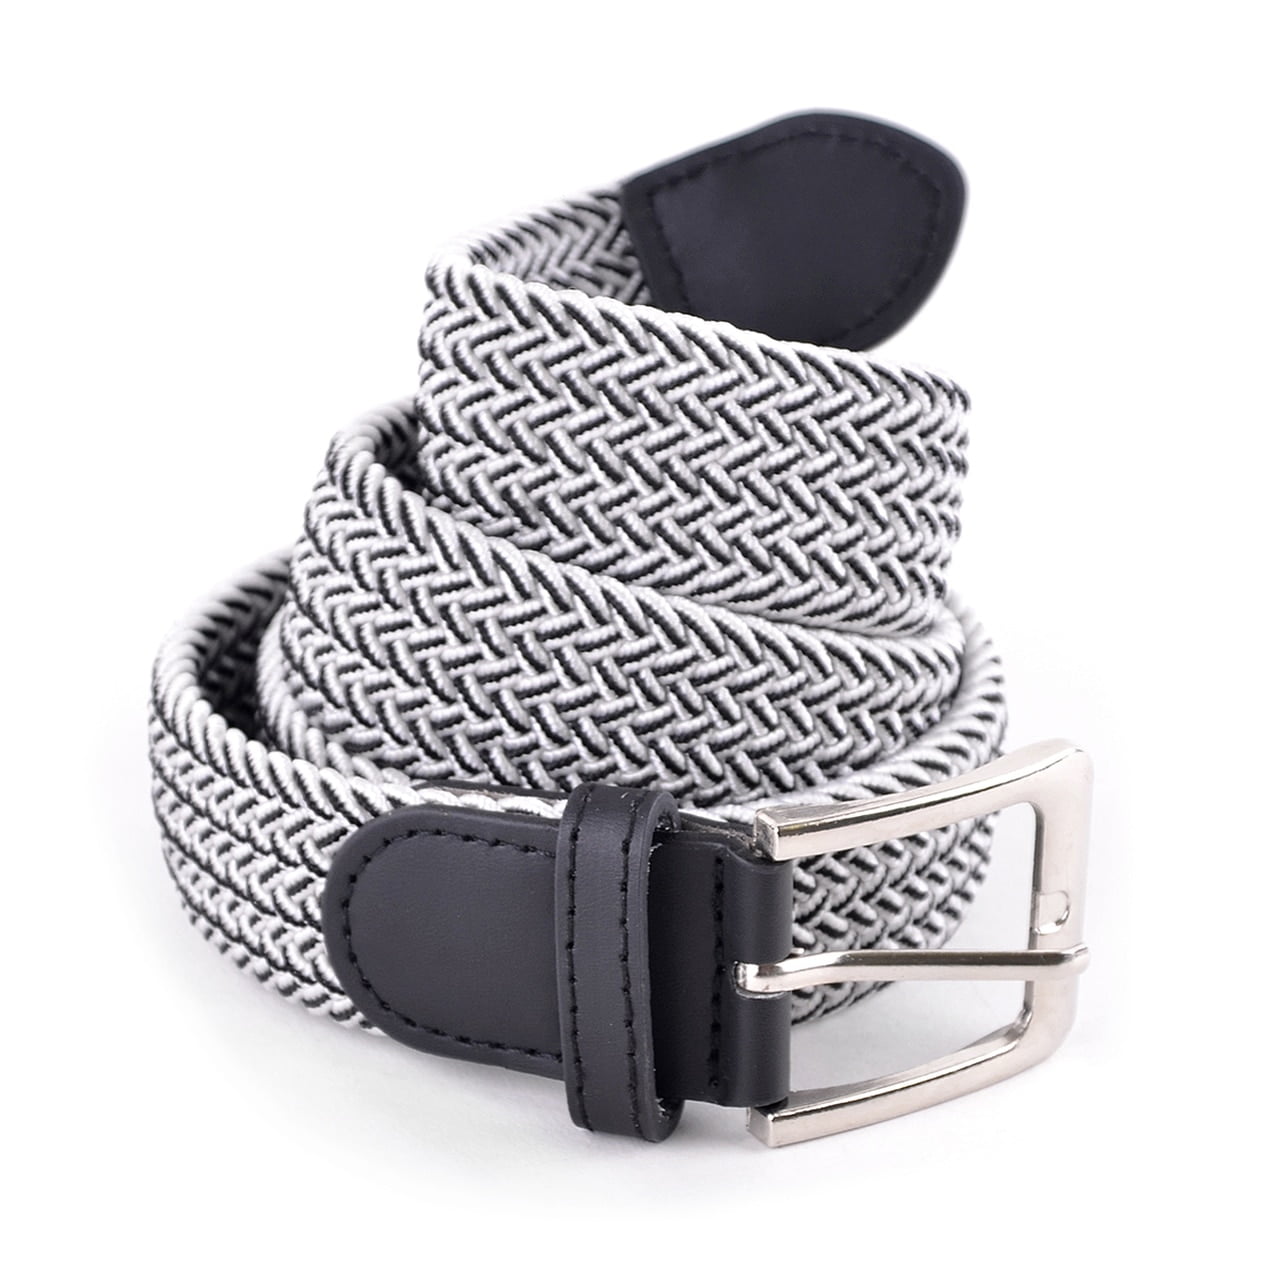 Unisex Golf Belts - Stretchy Belts for Men and Women - Walmart.com